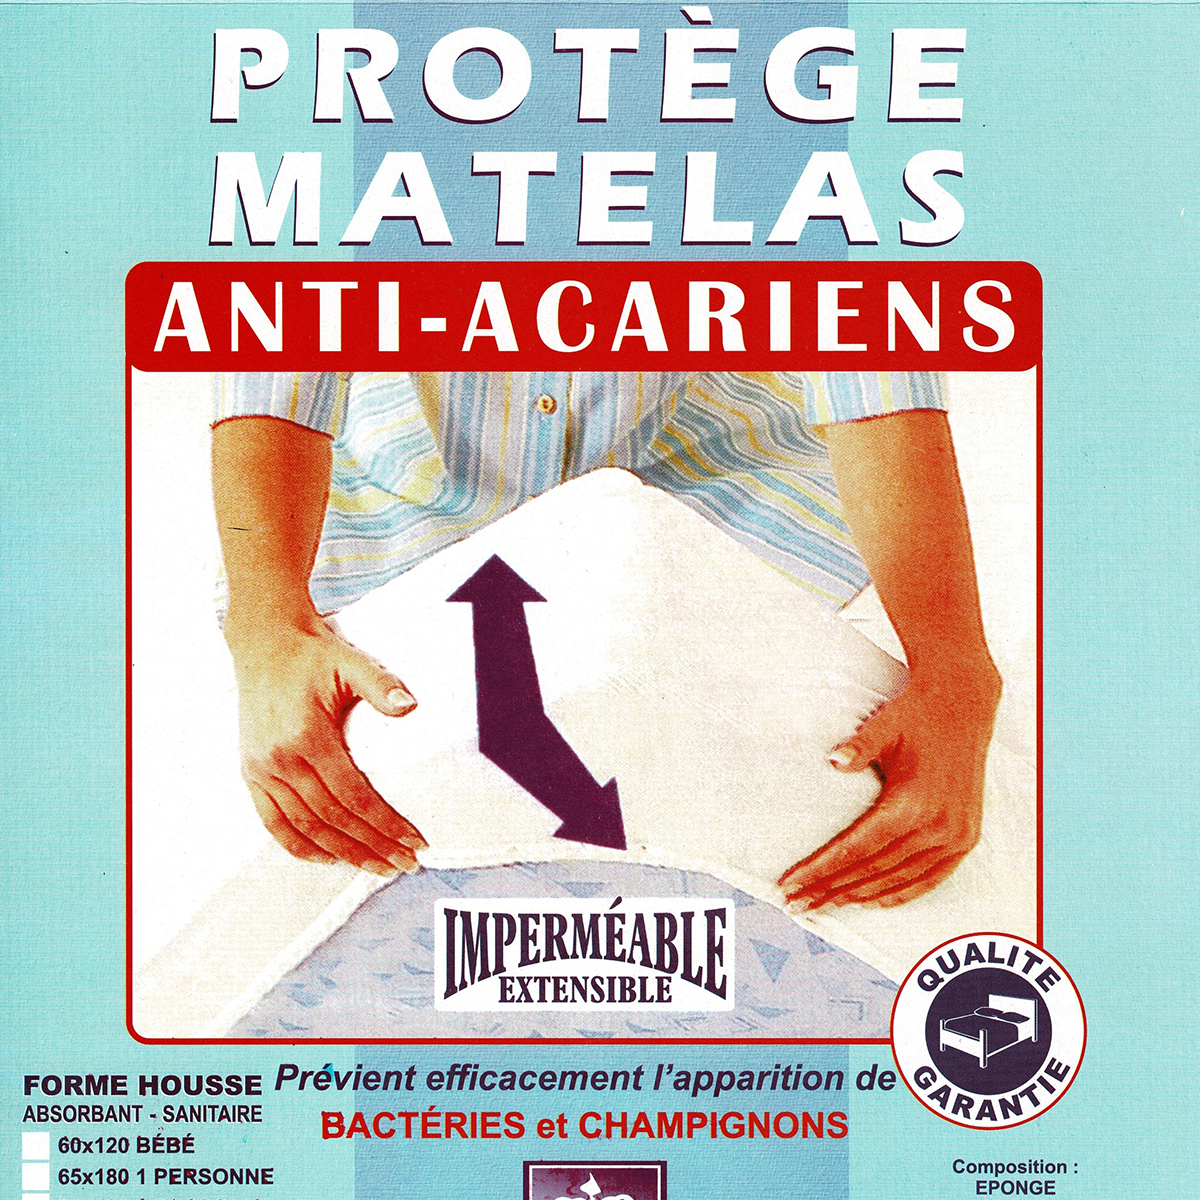 Alése (90X190) protège-matelas Imperméable Anti-Acariens Anti